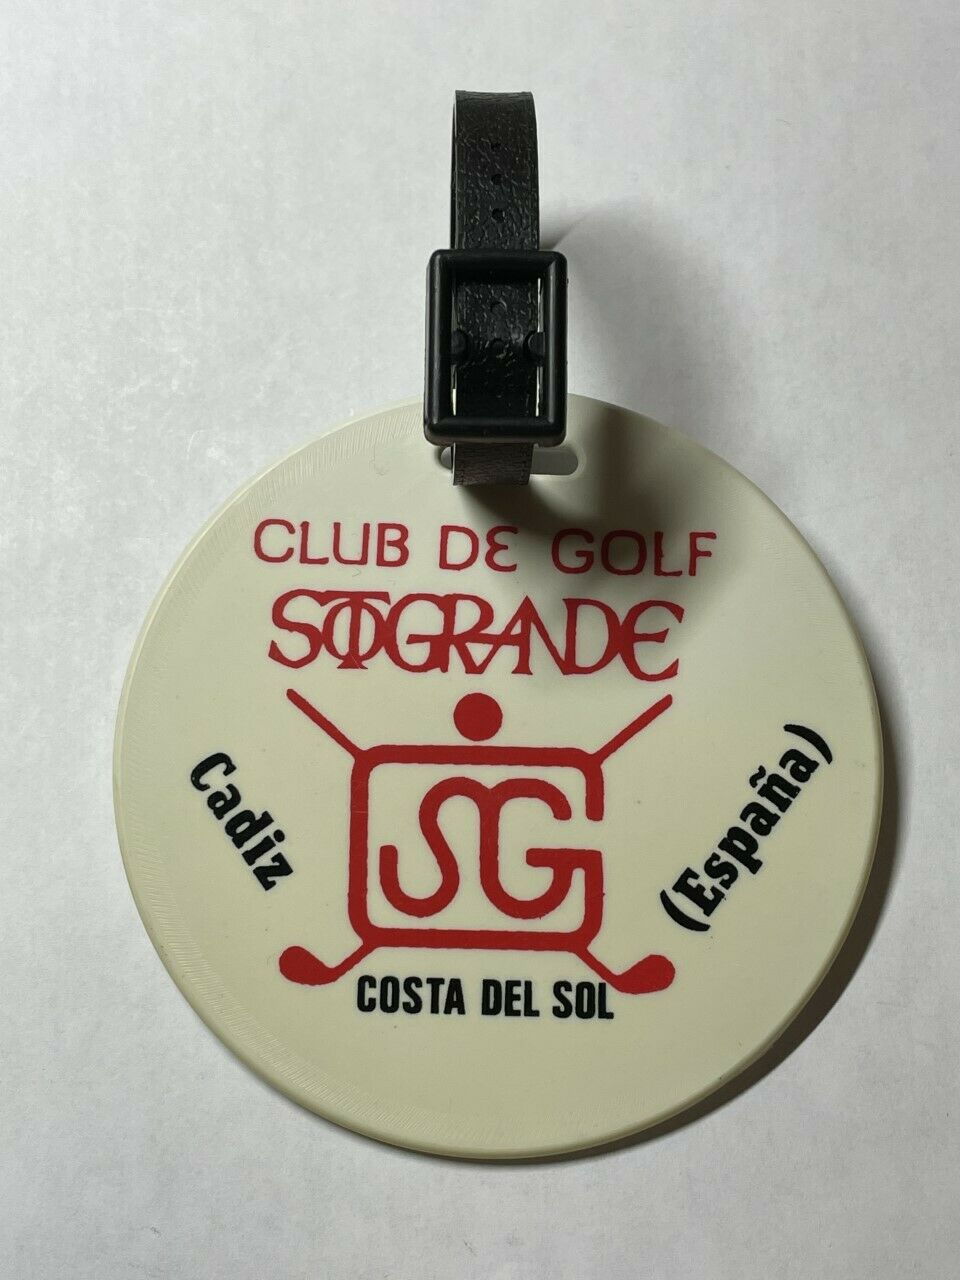 Vintage Rare Club De Golf Sotogrande Golf Bag Tag - Costa Del Sol, Spain